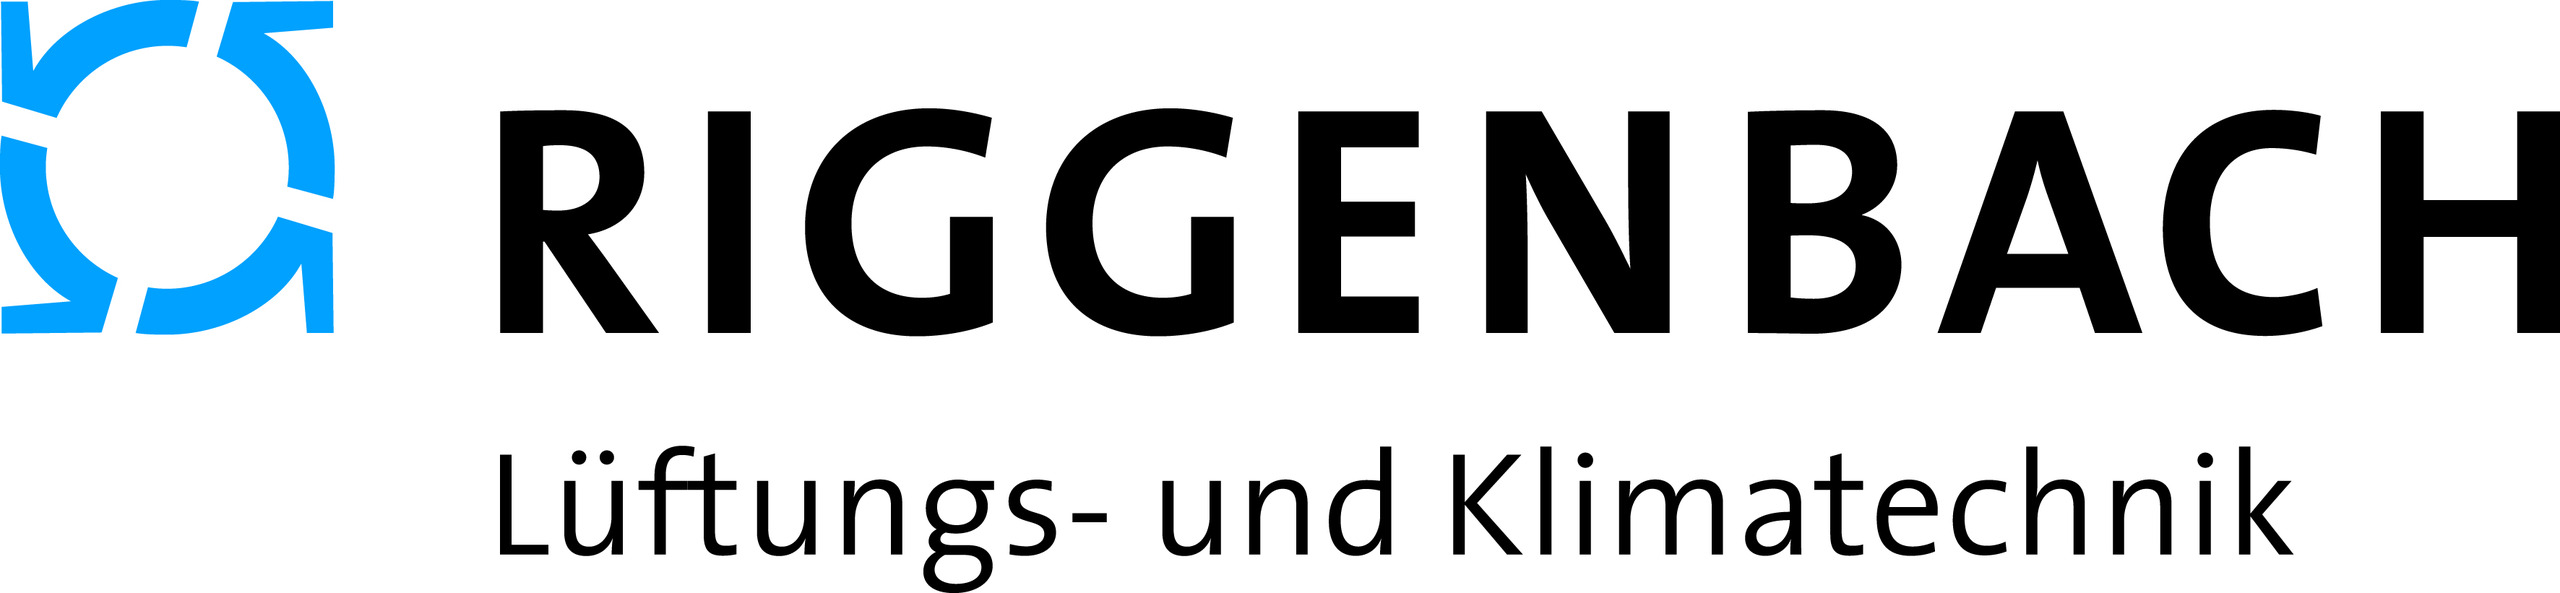 Riggenbach AG